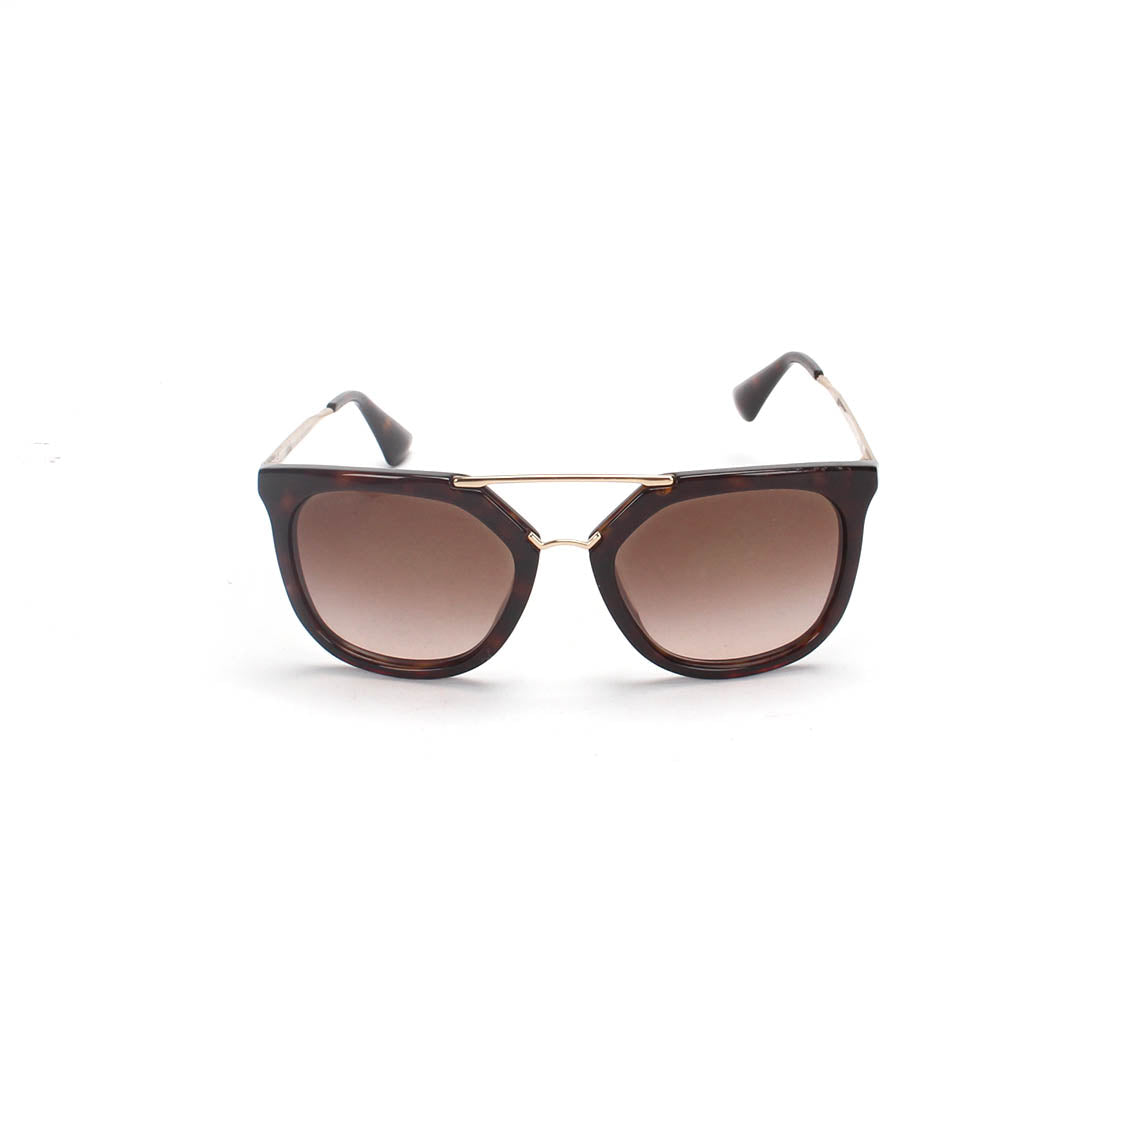 Catwalk Tinted Sunglasses SPR 13Q-A